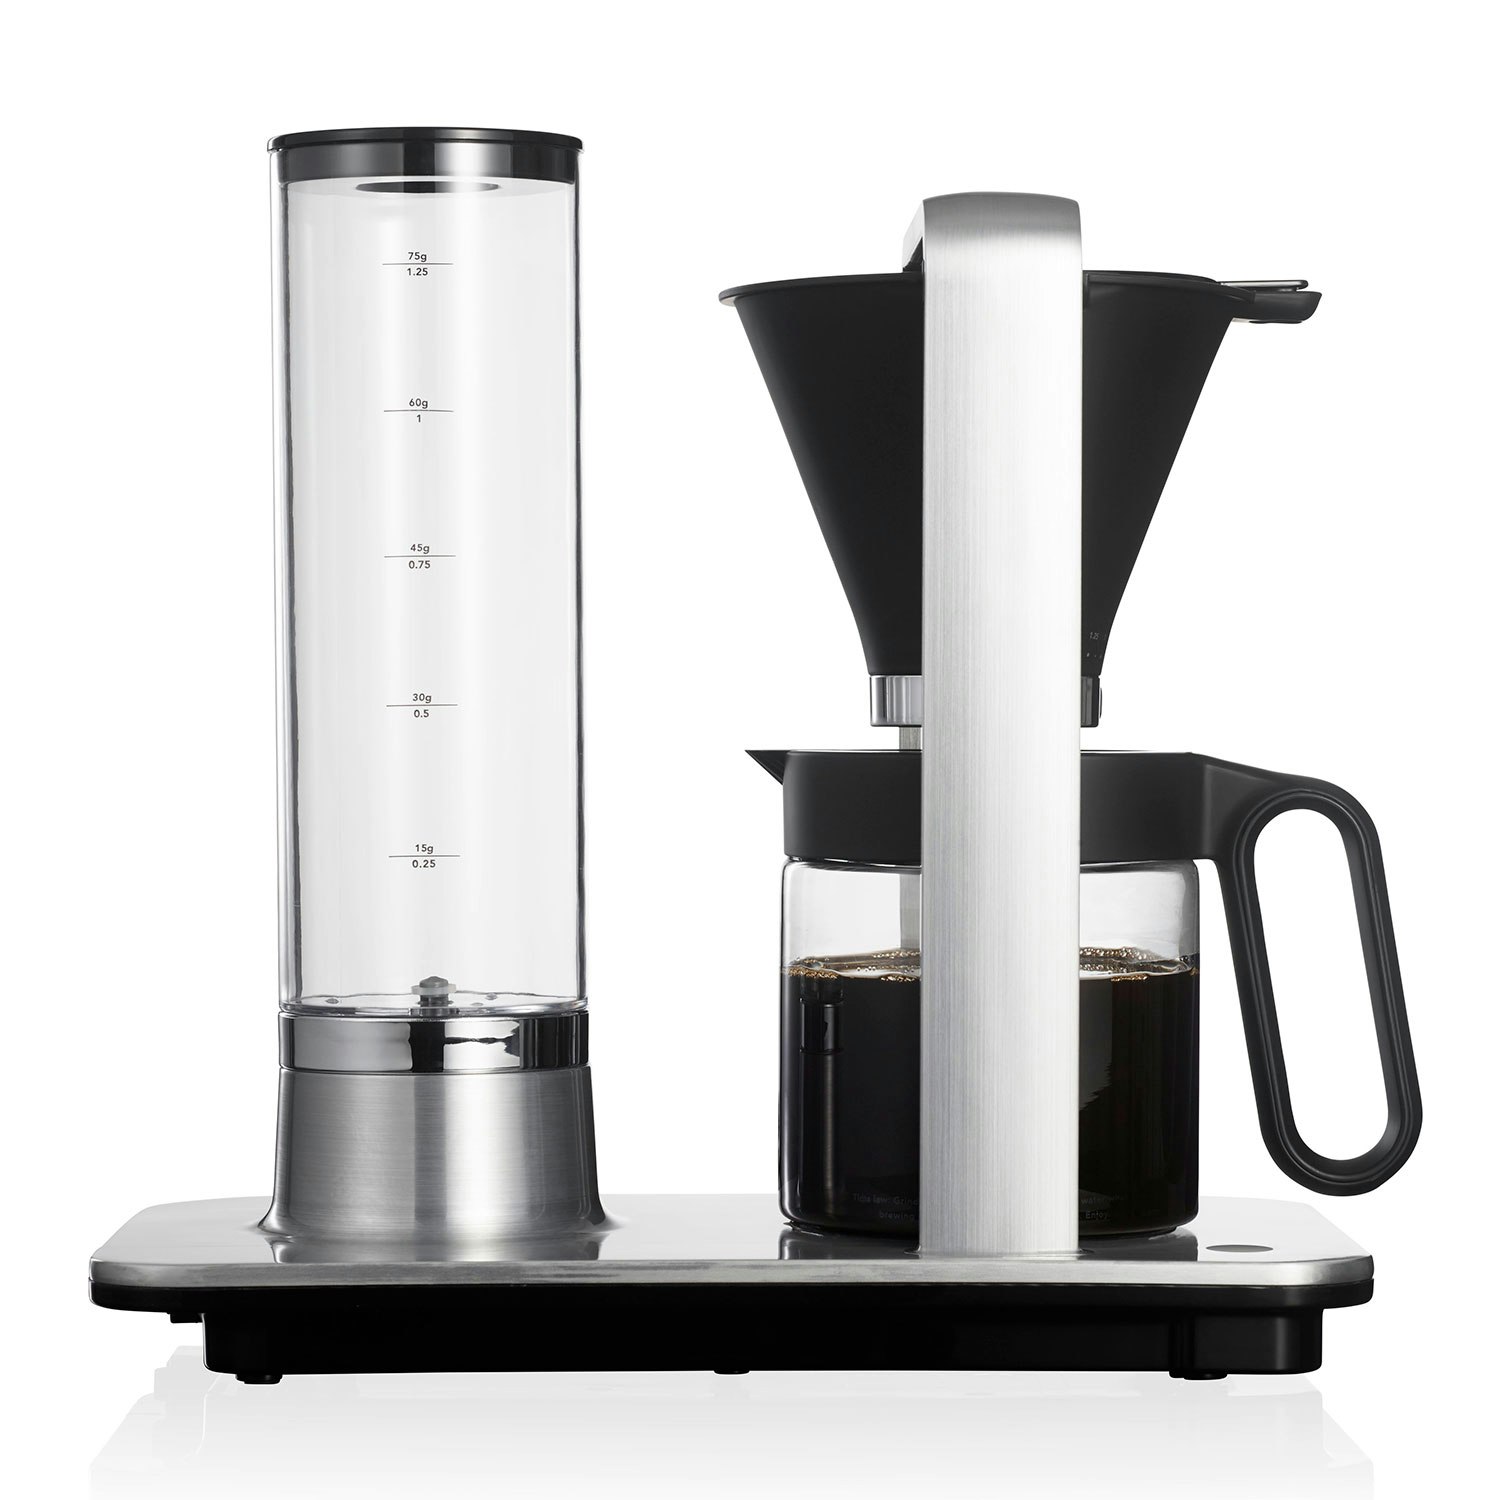 https://royaldesign.com/image/11/wilfa-svart-presisjon-coffee-maker-wsp-2a-silver-0